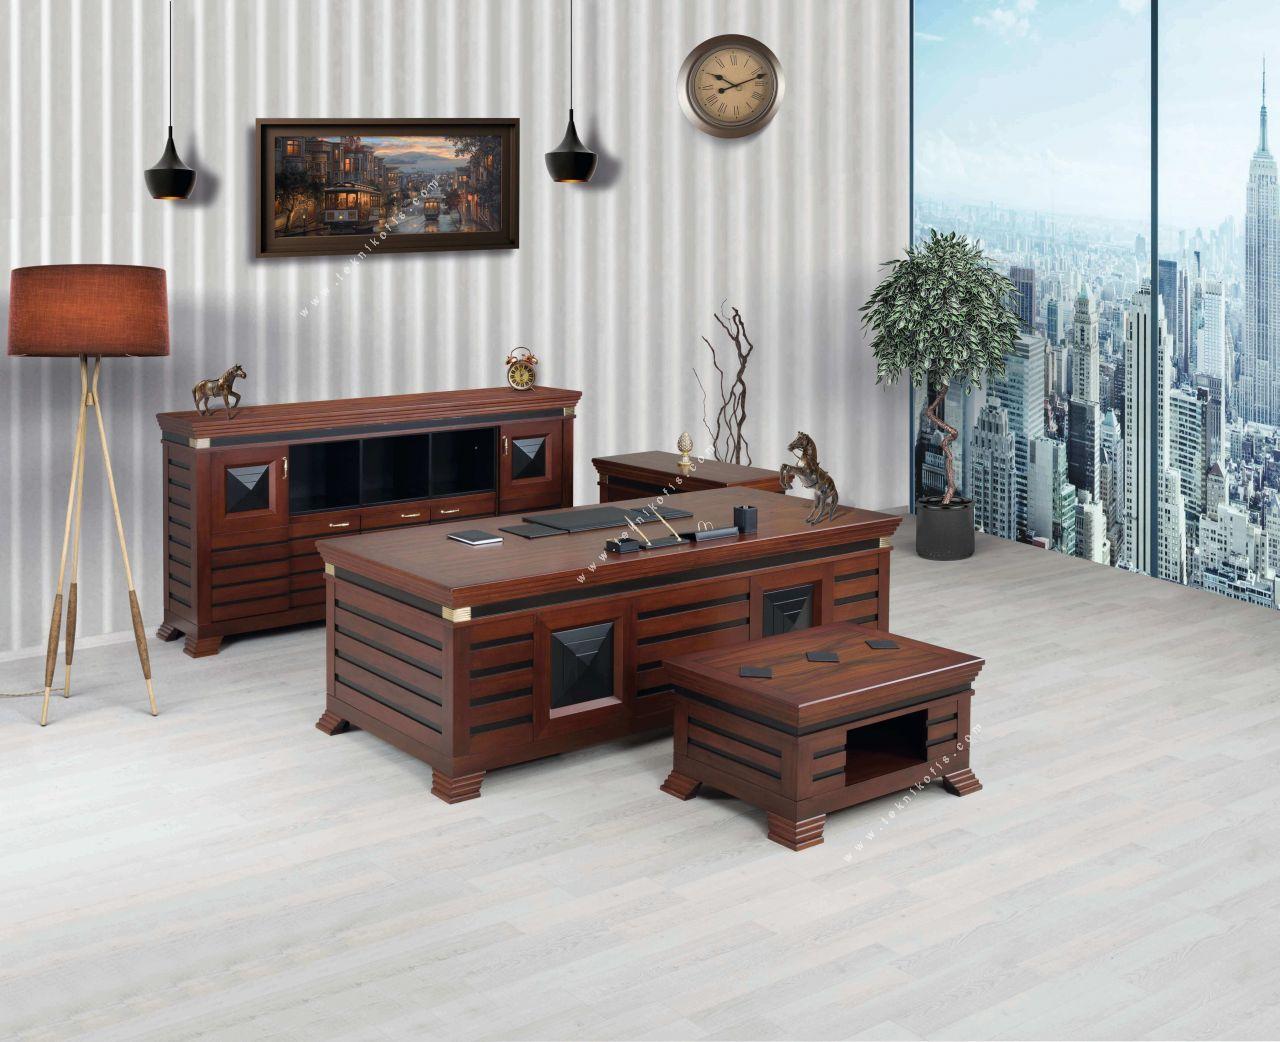 castle gloosy executive furniture